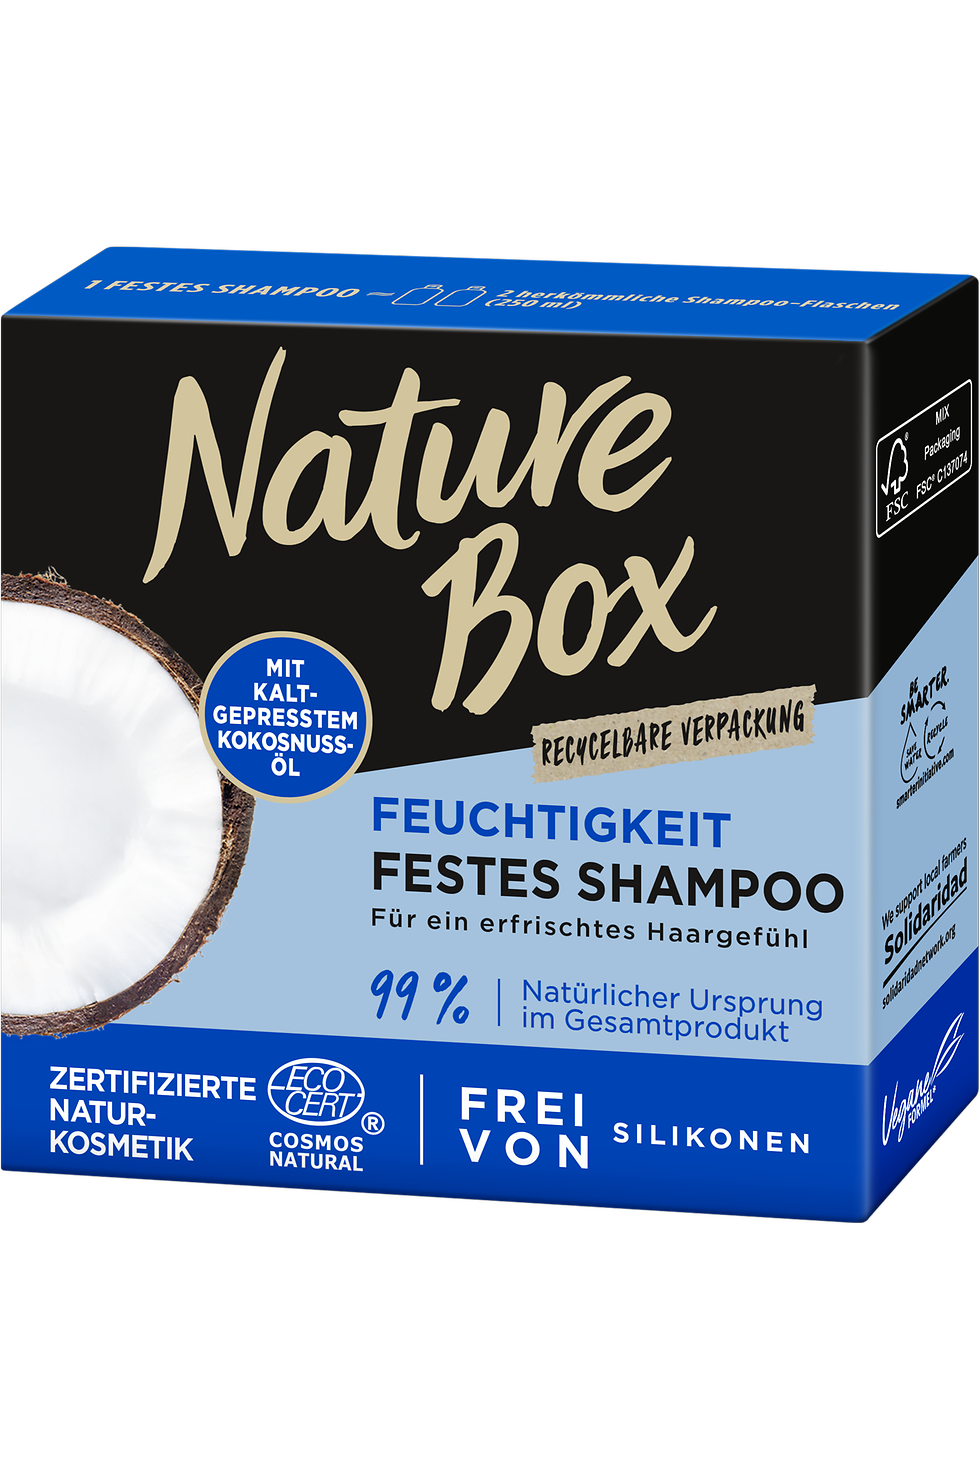 Nature Box Feuchtigkeit Festes Shampoo mit kaltgepresstem Kokosnuss-Öl